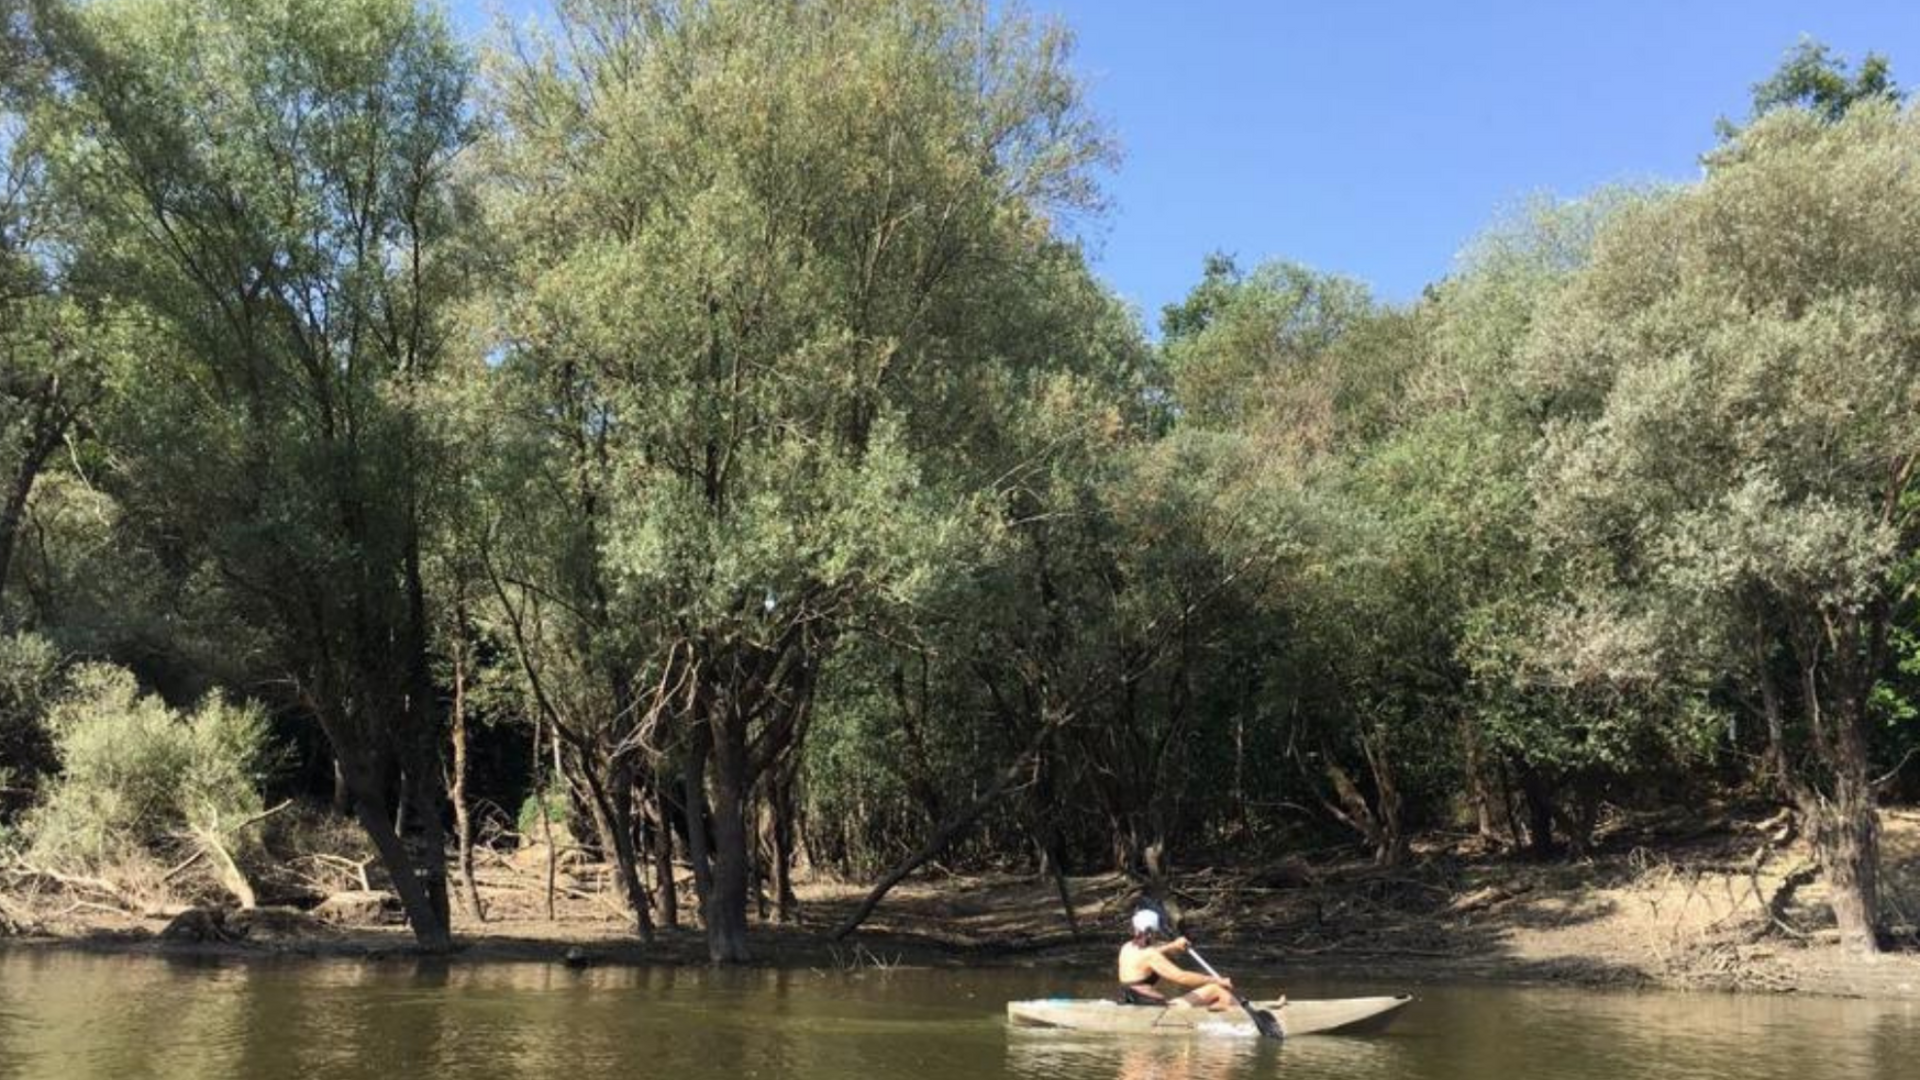 Kayaking in the calcione dam